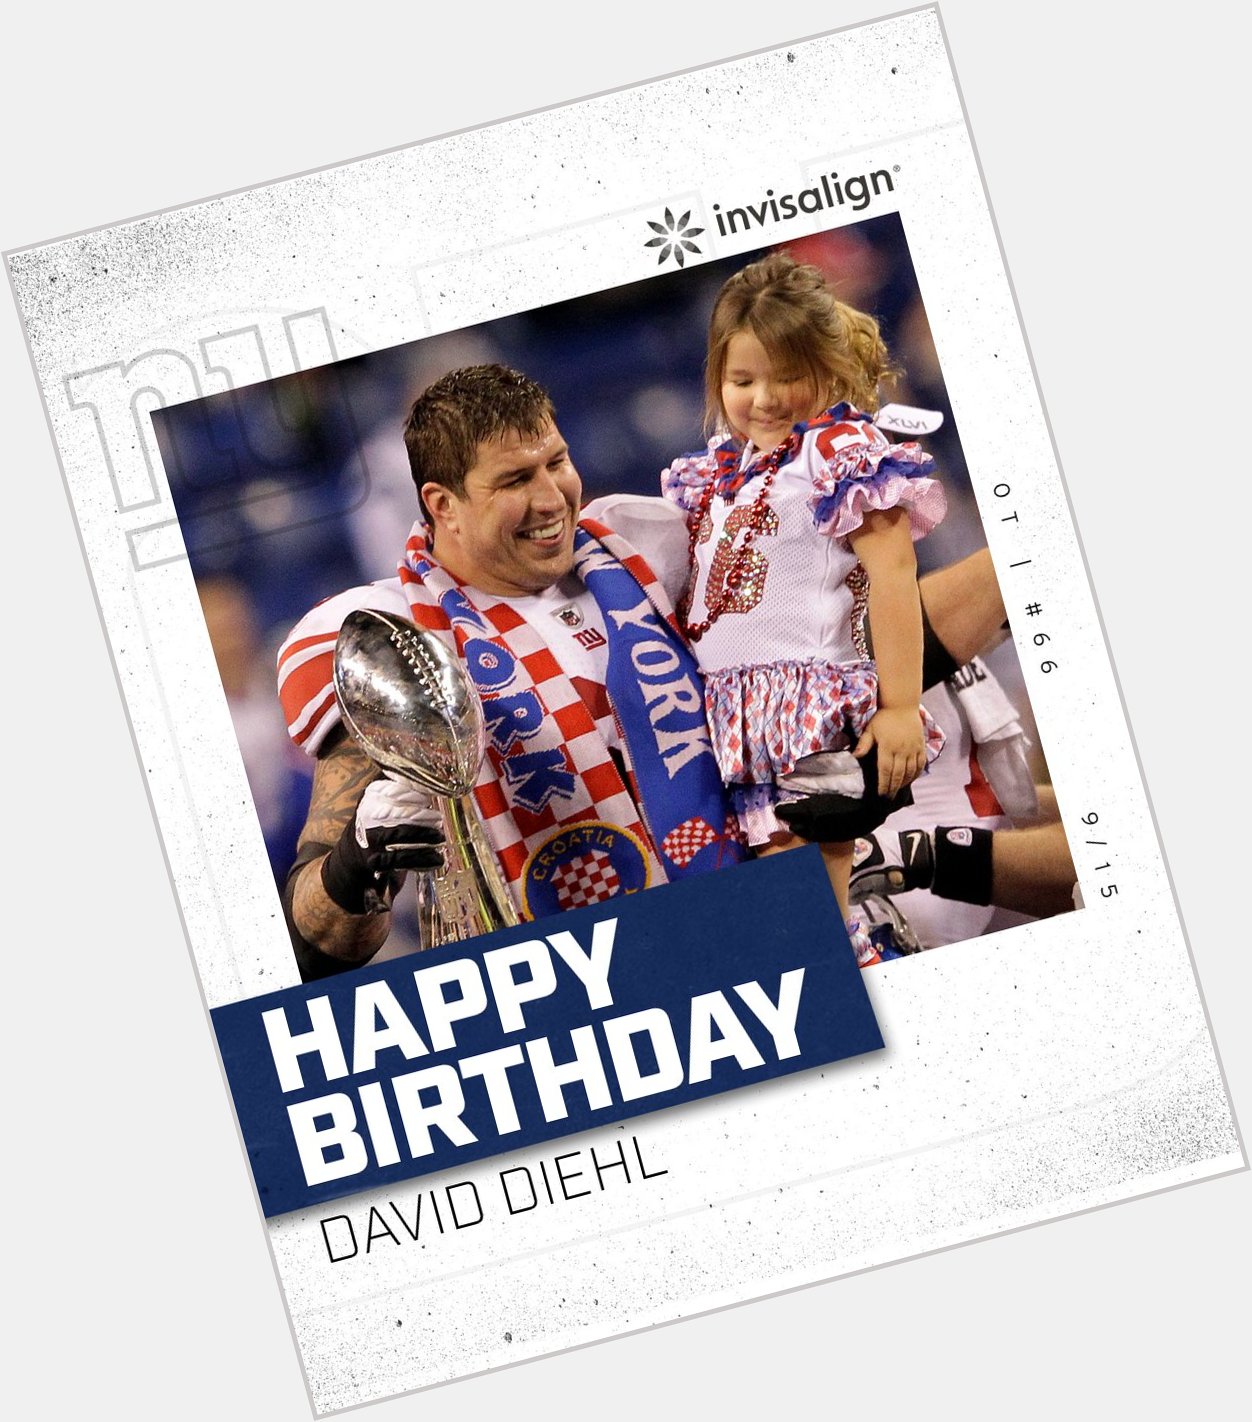 Happy Birthday David Diehl 